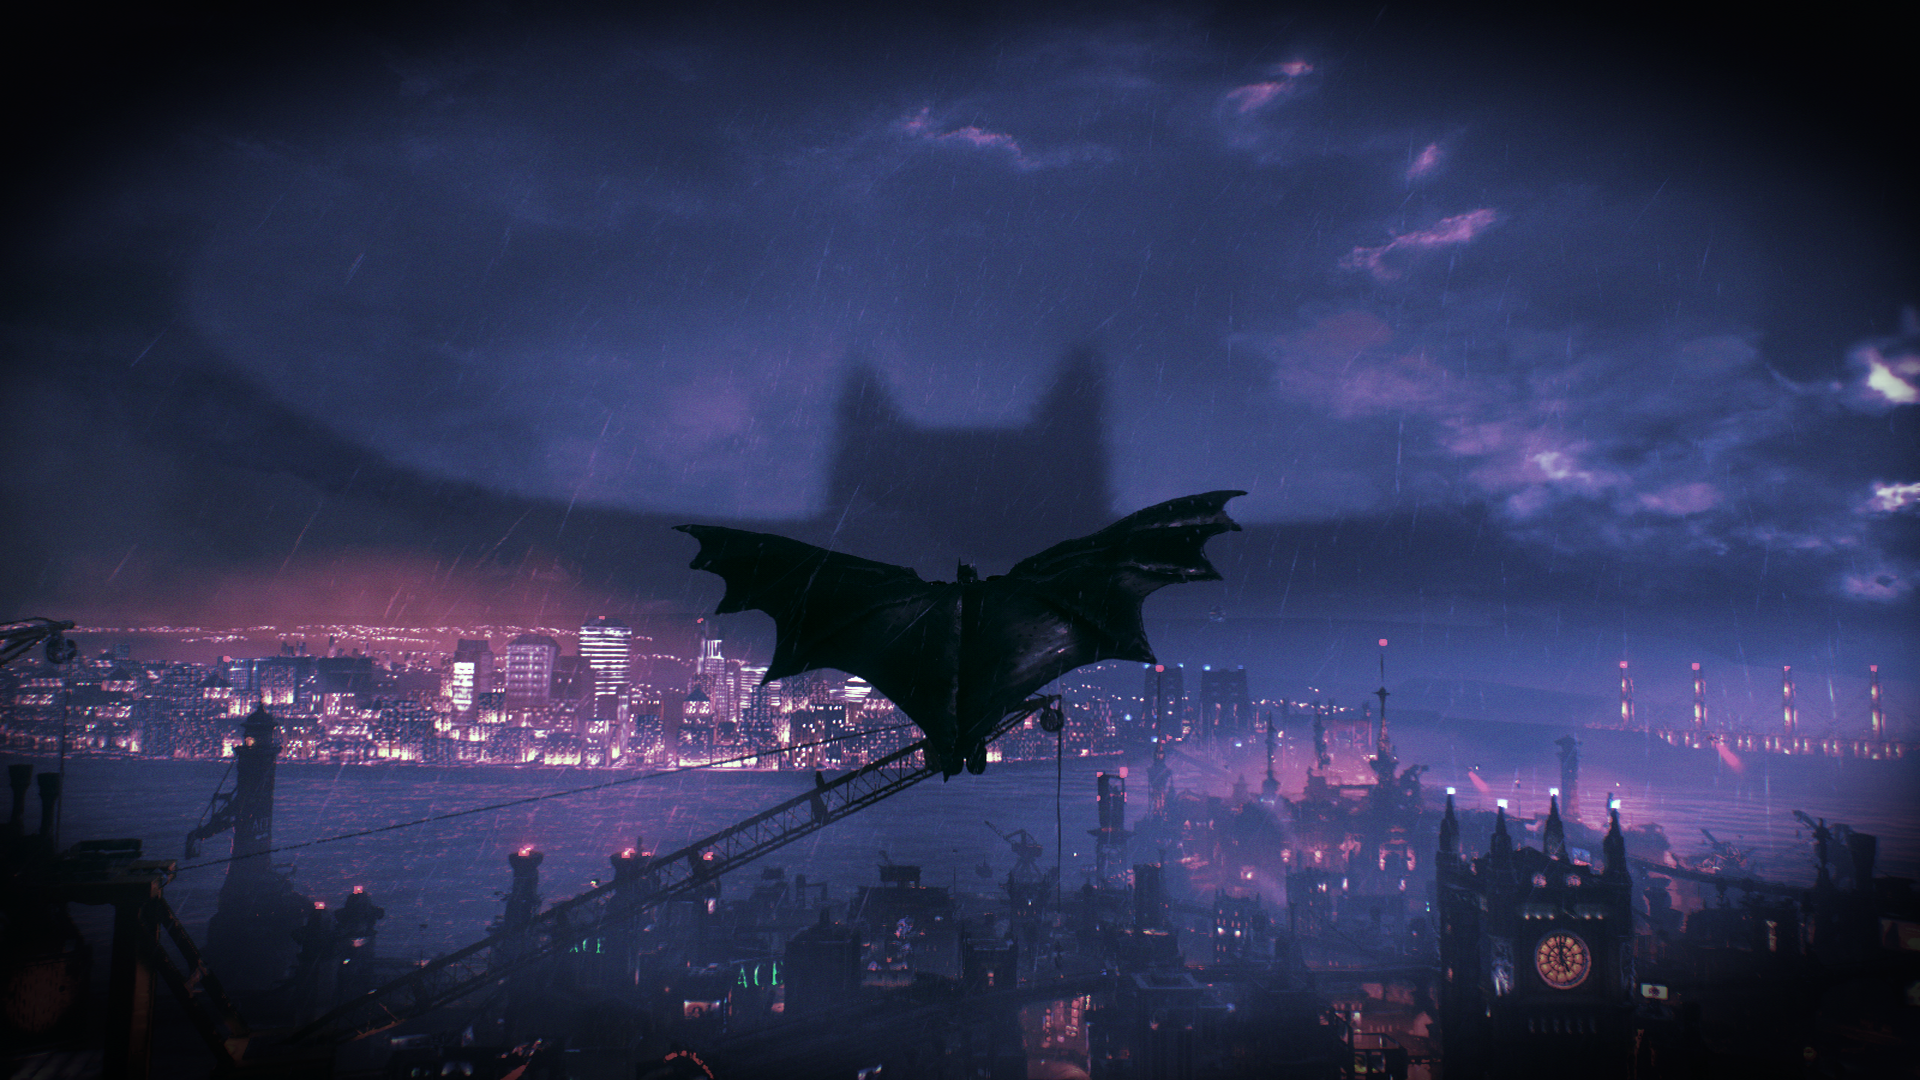 Batman Gotham Night Mode Wallpapers